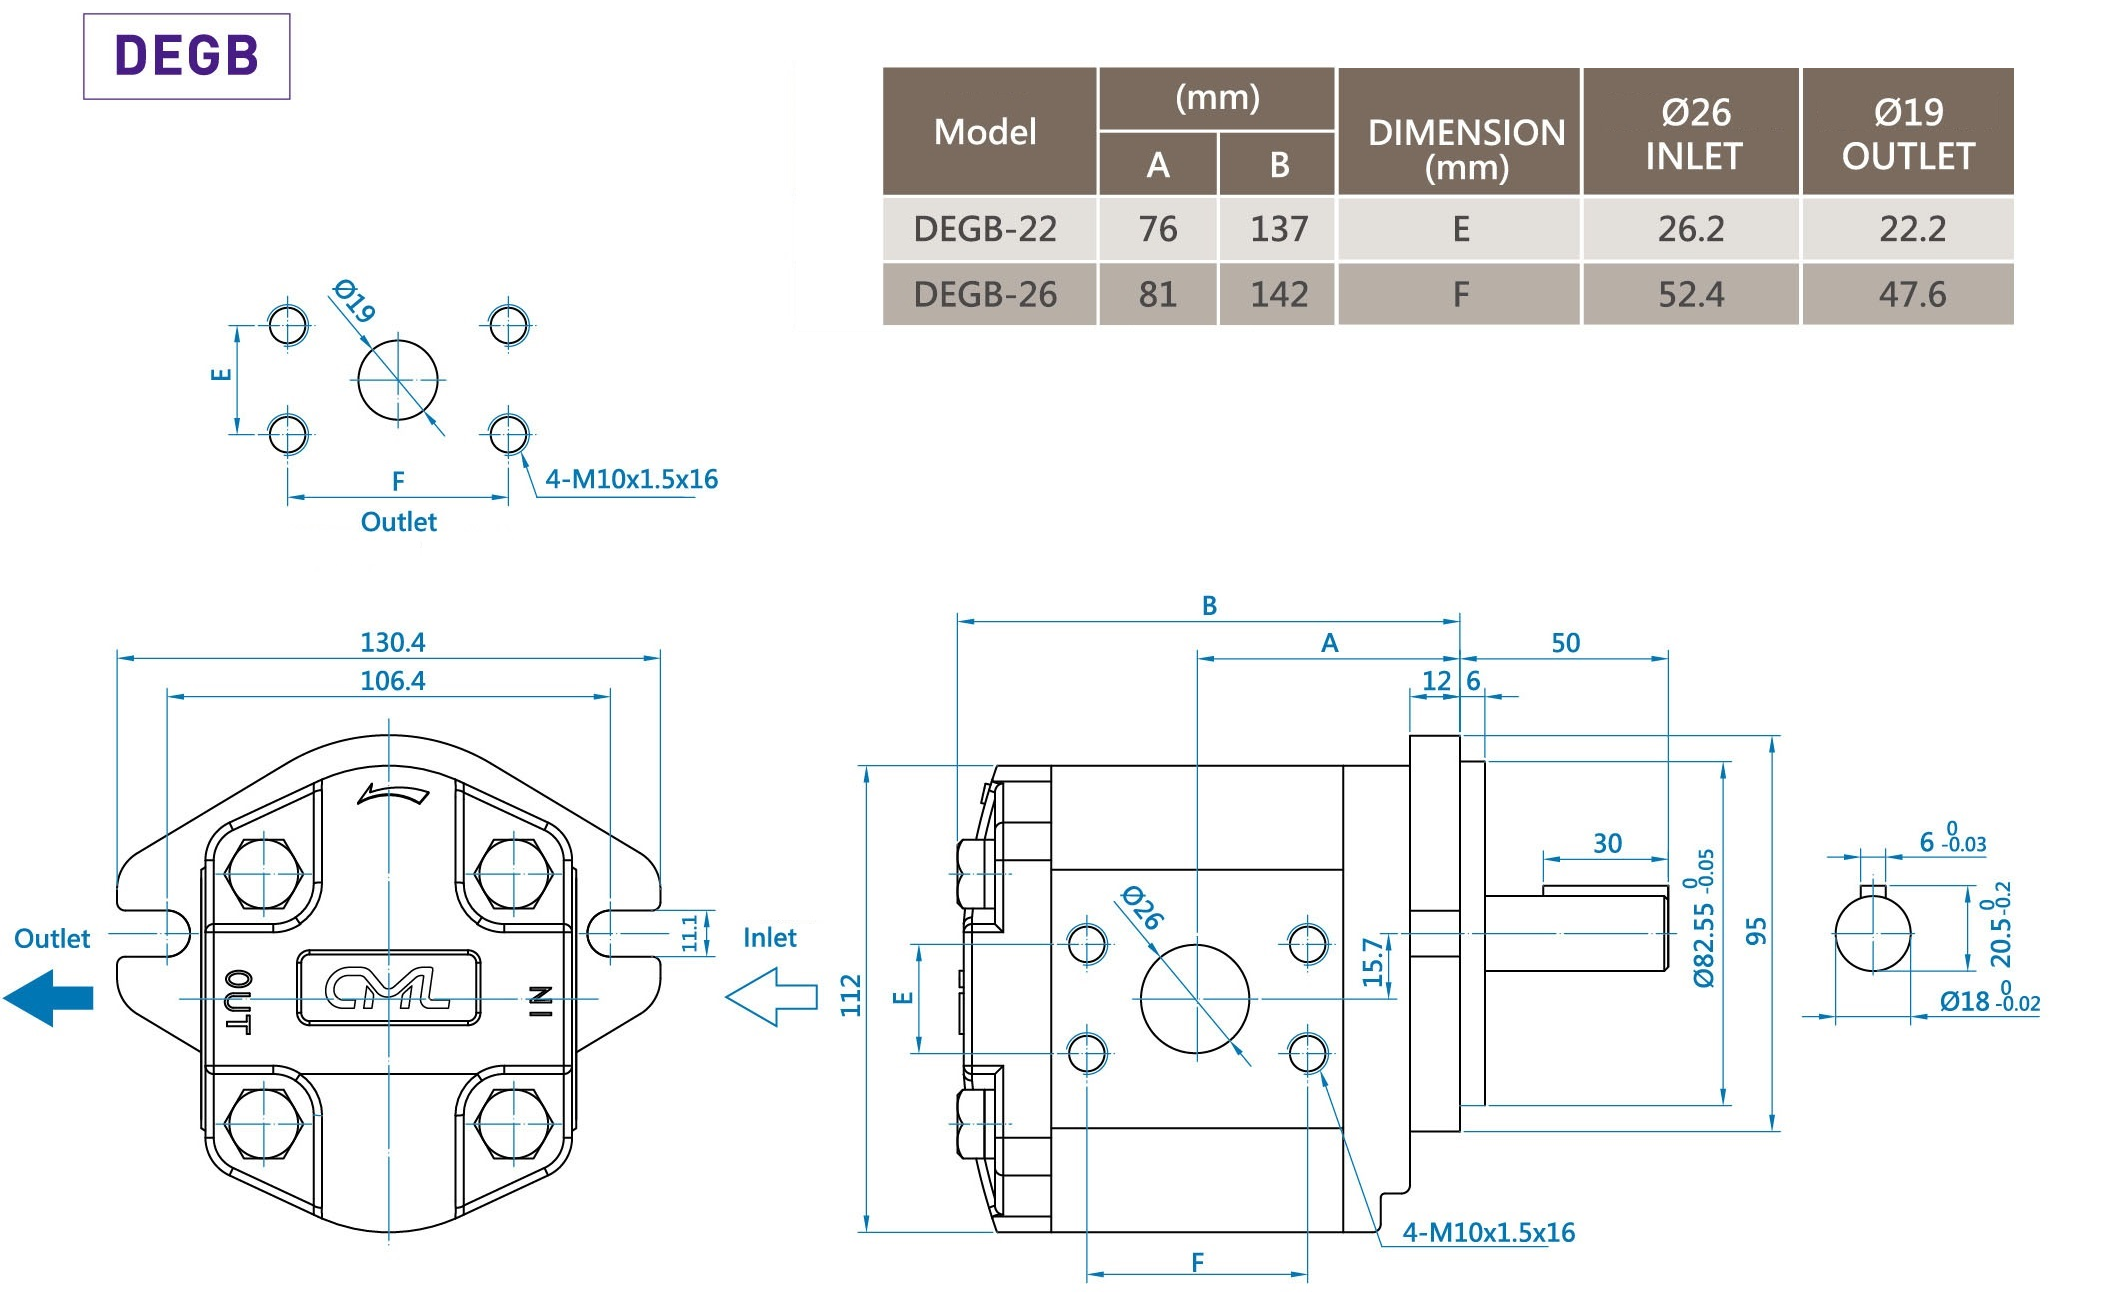 CML ダブルギア Bシリーズ低騒音外部歯車ポンプ DEGB 測定、寸法、図